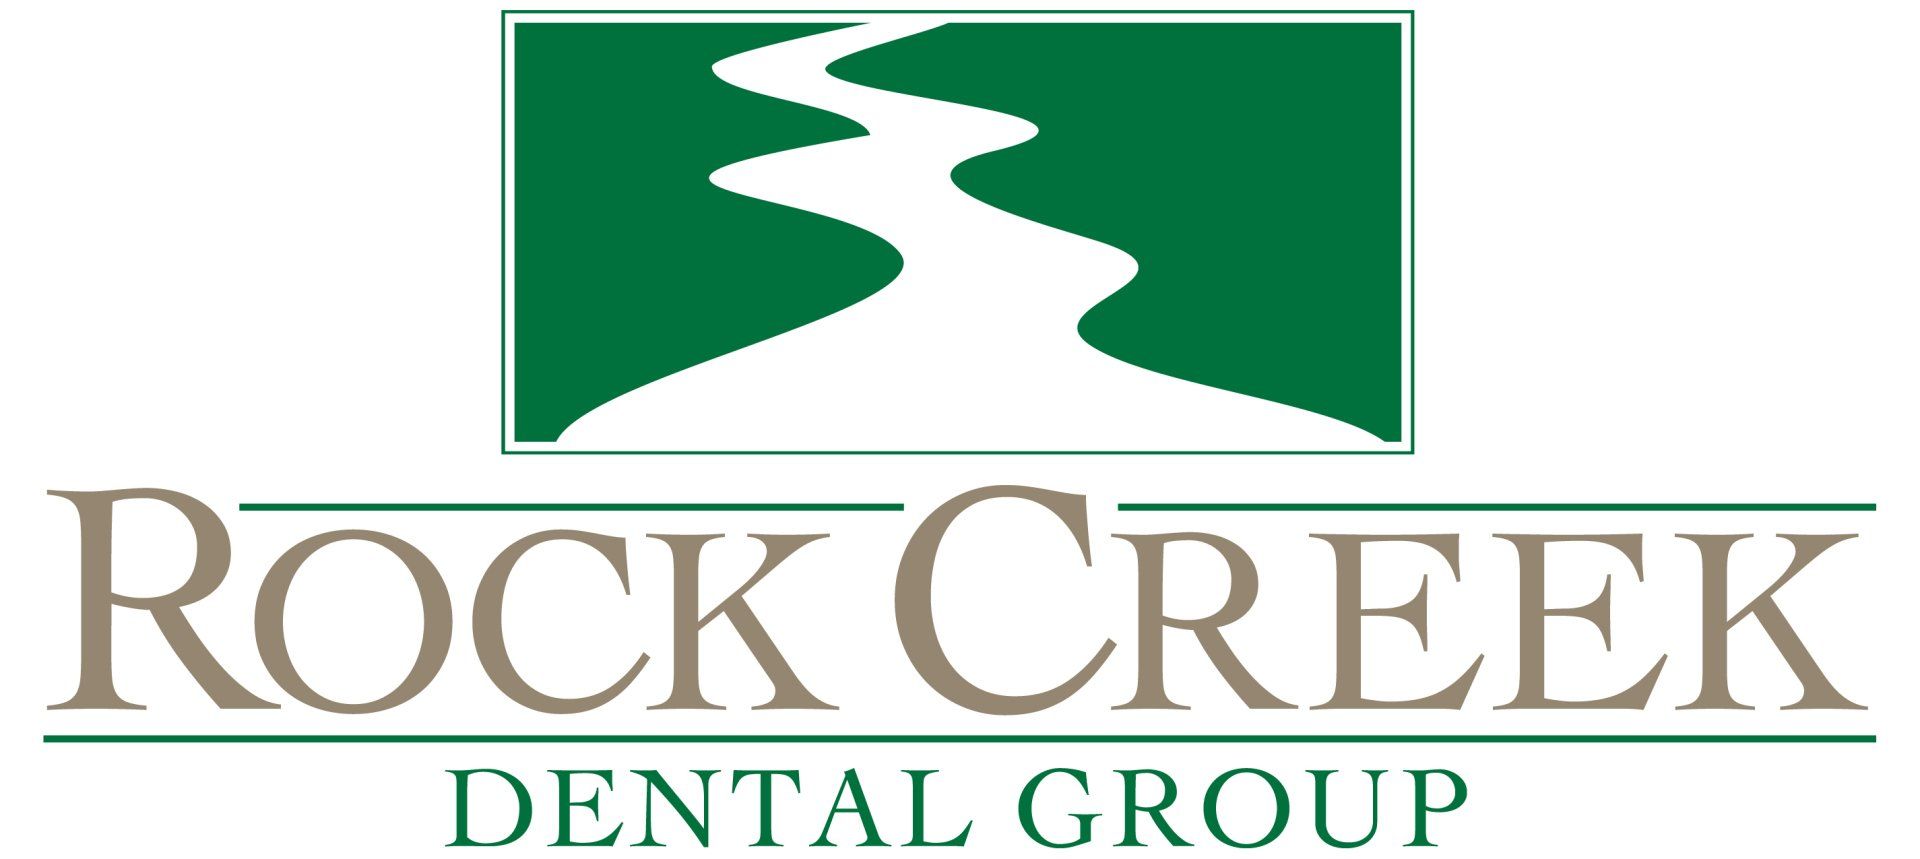 Rock Creek Dental Group